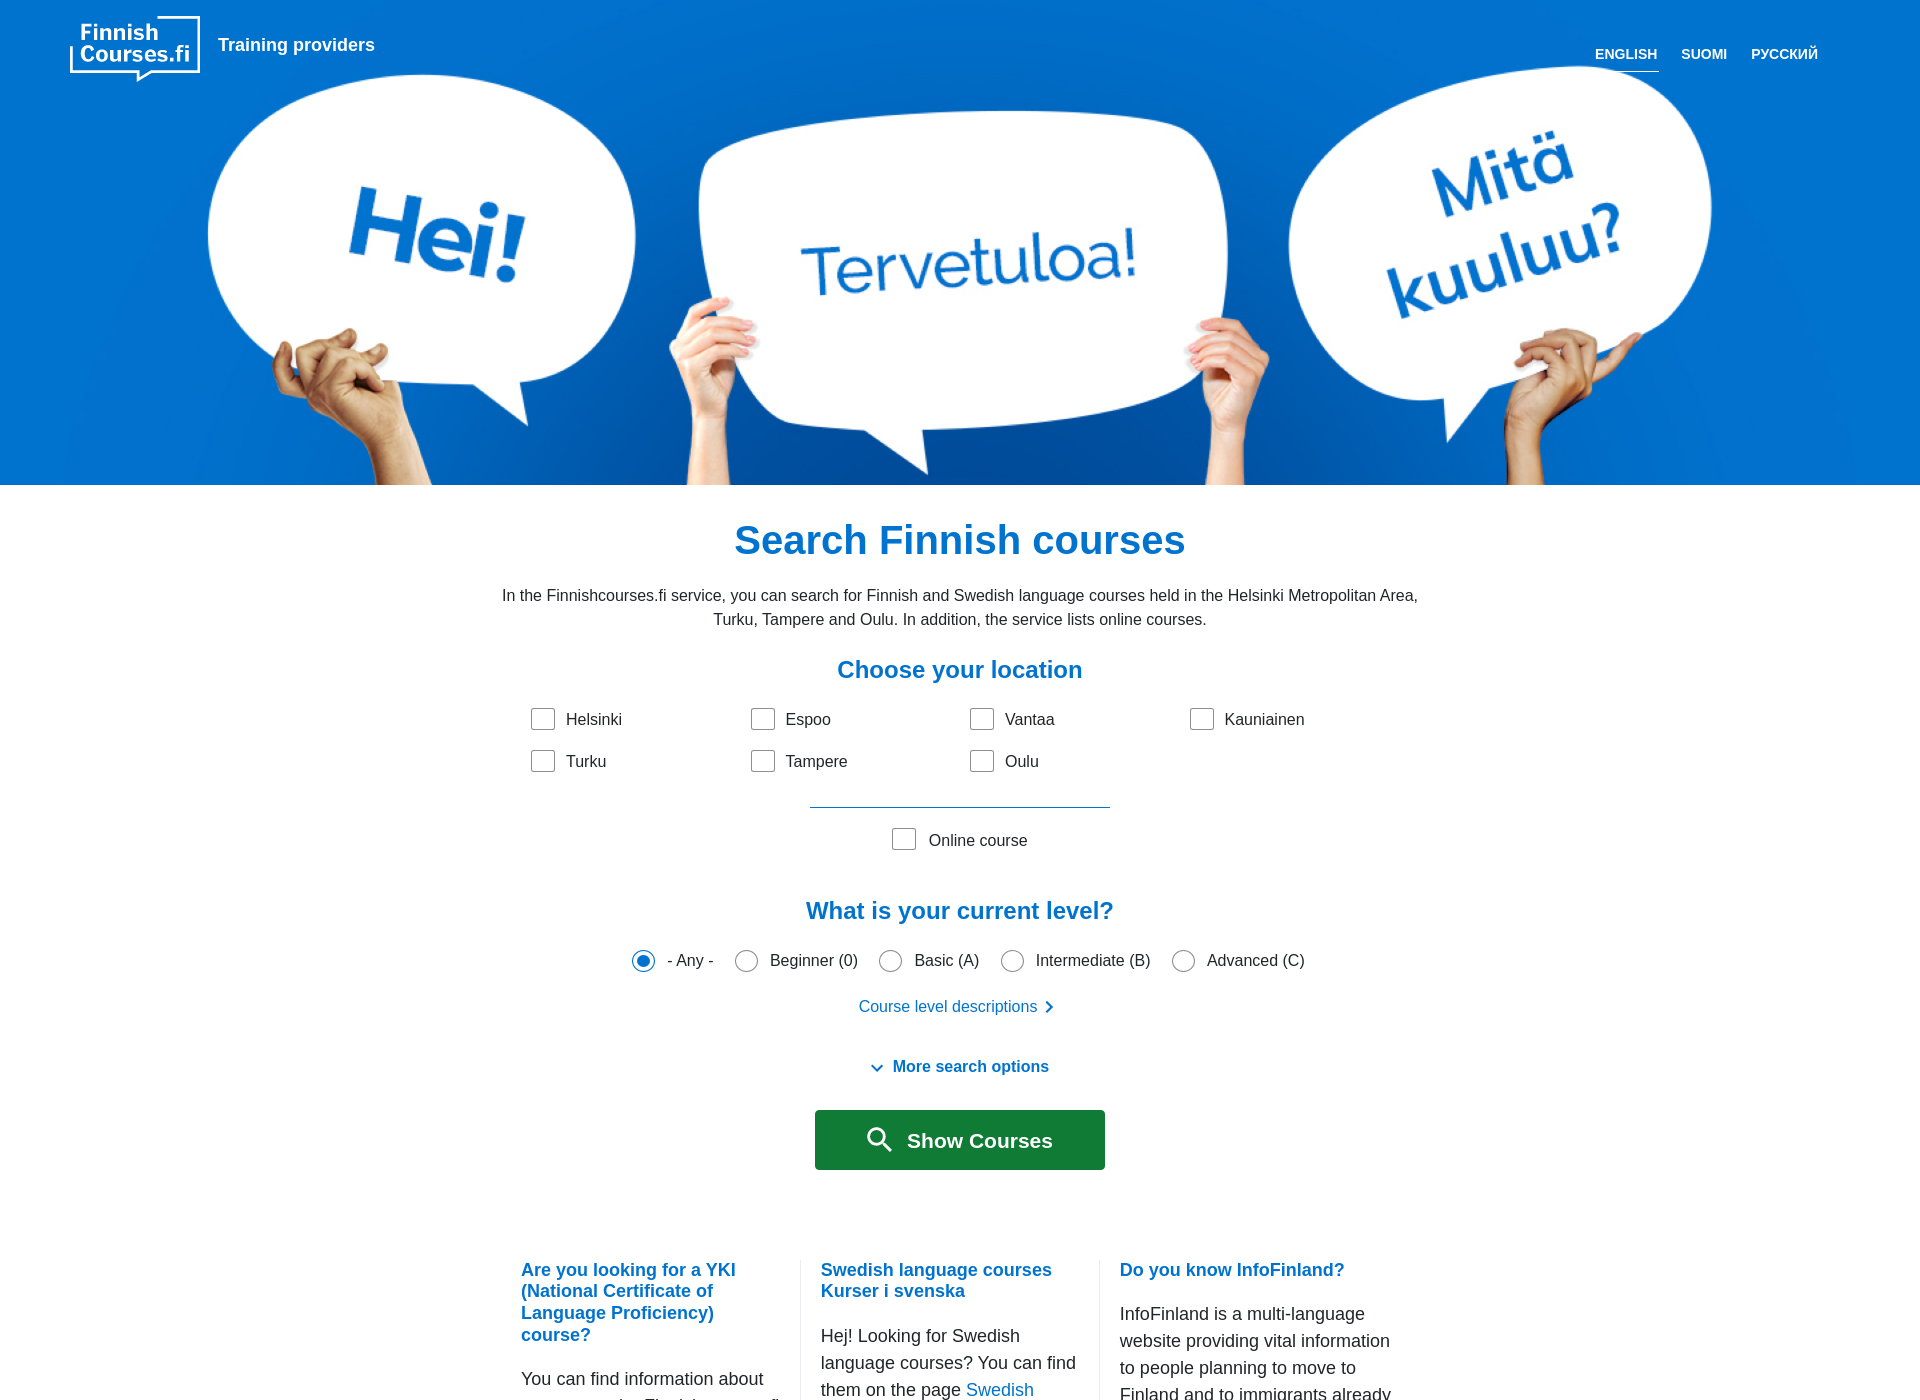 Näyttökuva finnishcourses.fi